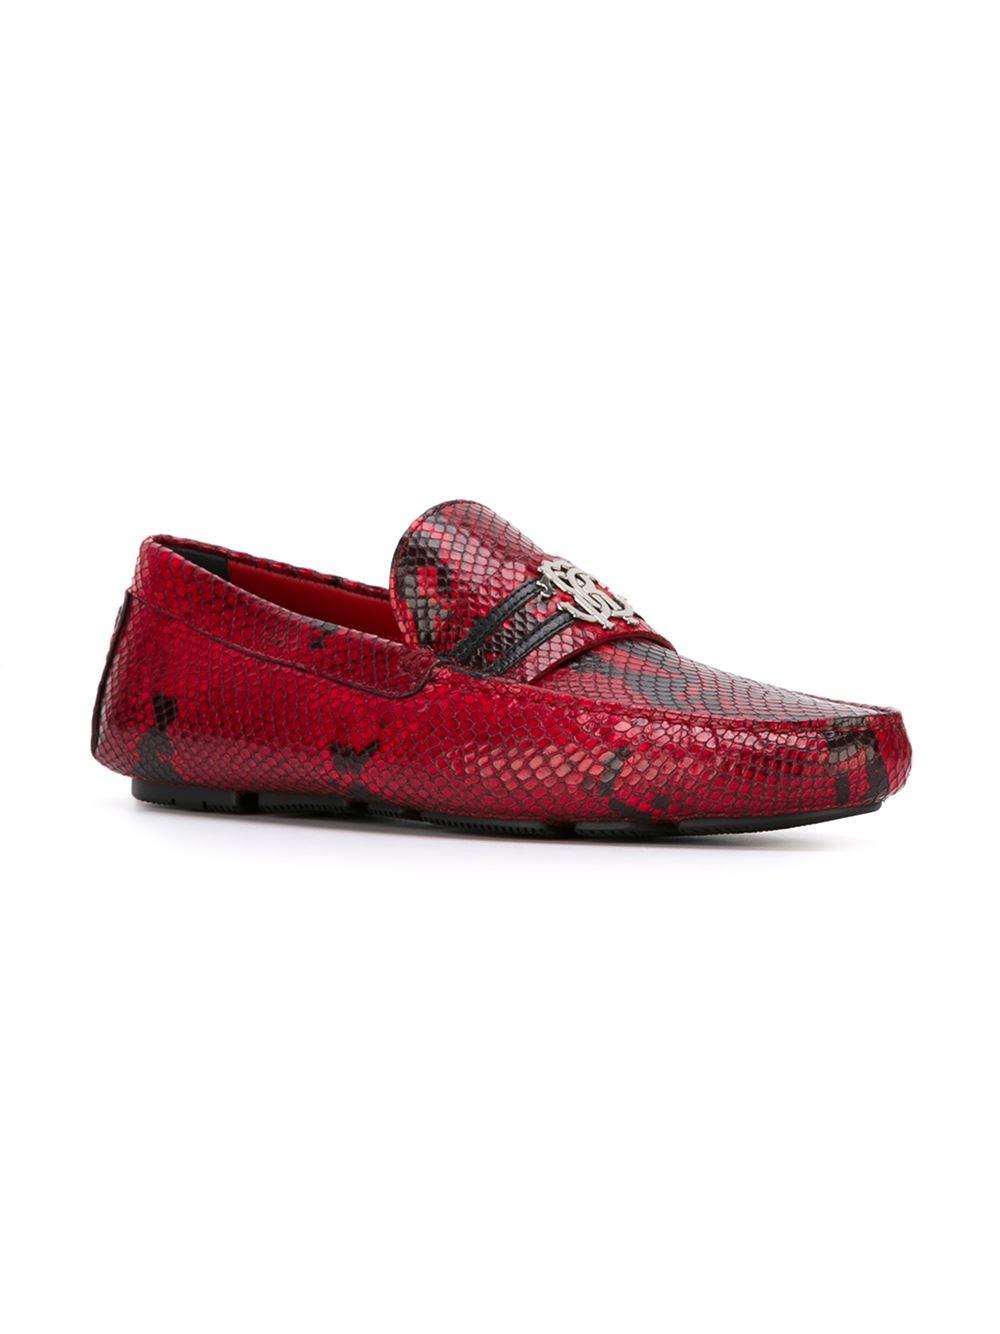 Lyst - Roberto Cavalli Snakeskin Loafers in Red for Men